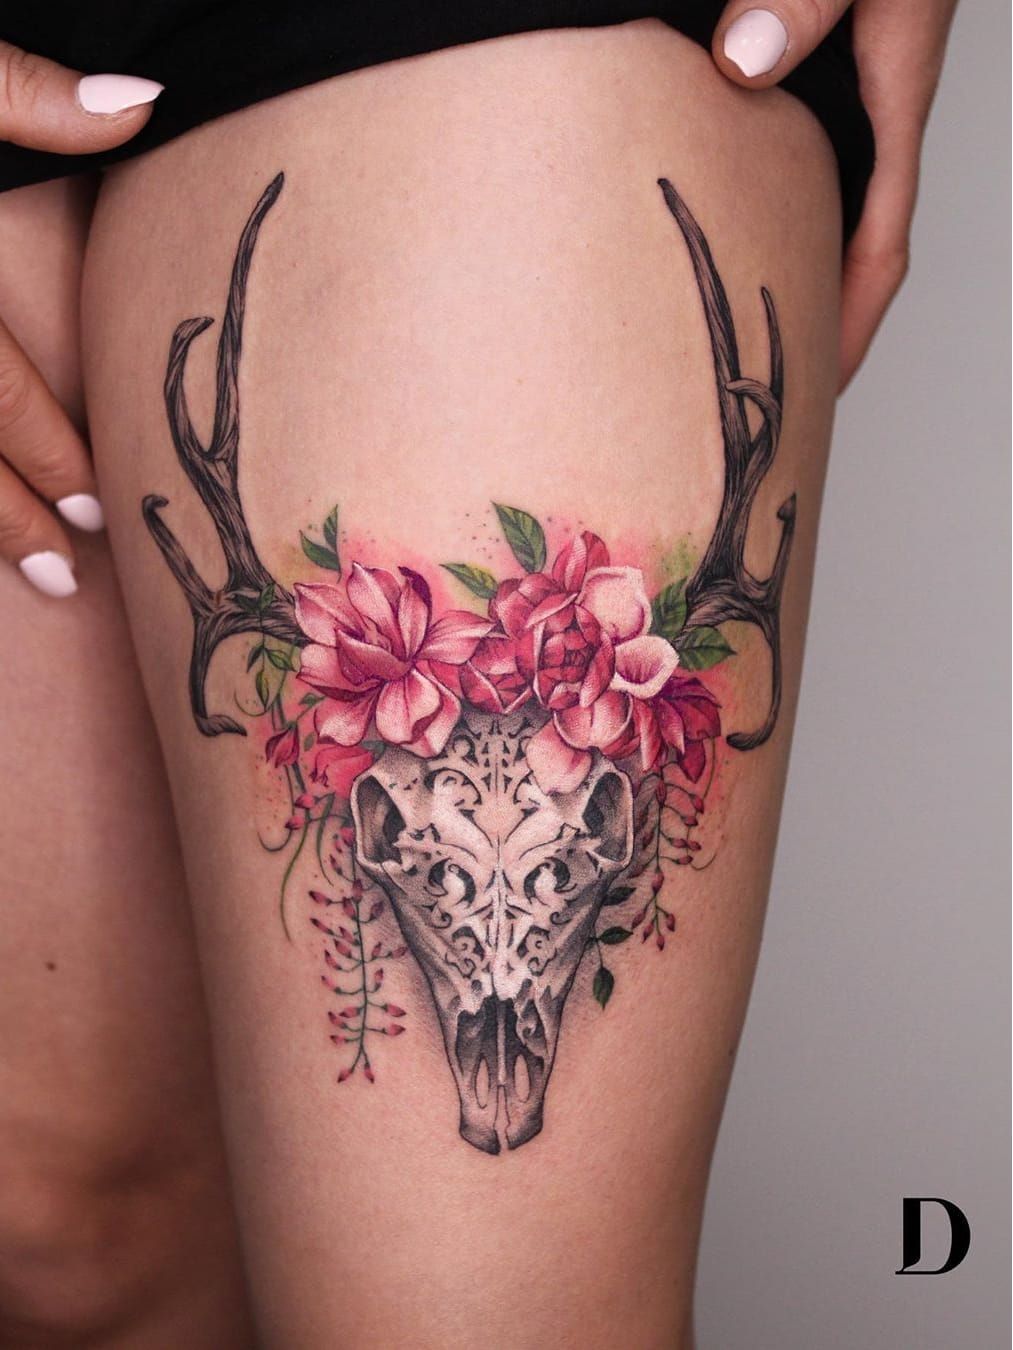 Cow Skull Tattoos Meanings  Tattoo Ideas  Skull thigh tattoos Sleeve  tattoos for women Cowgirl tattoos